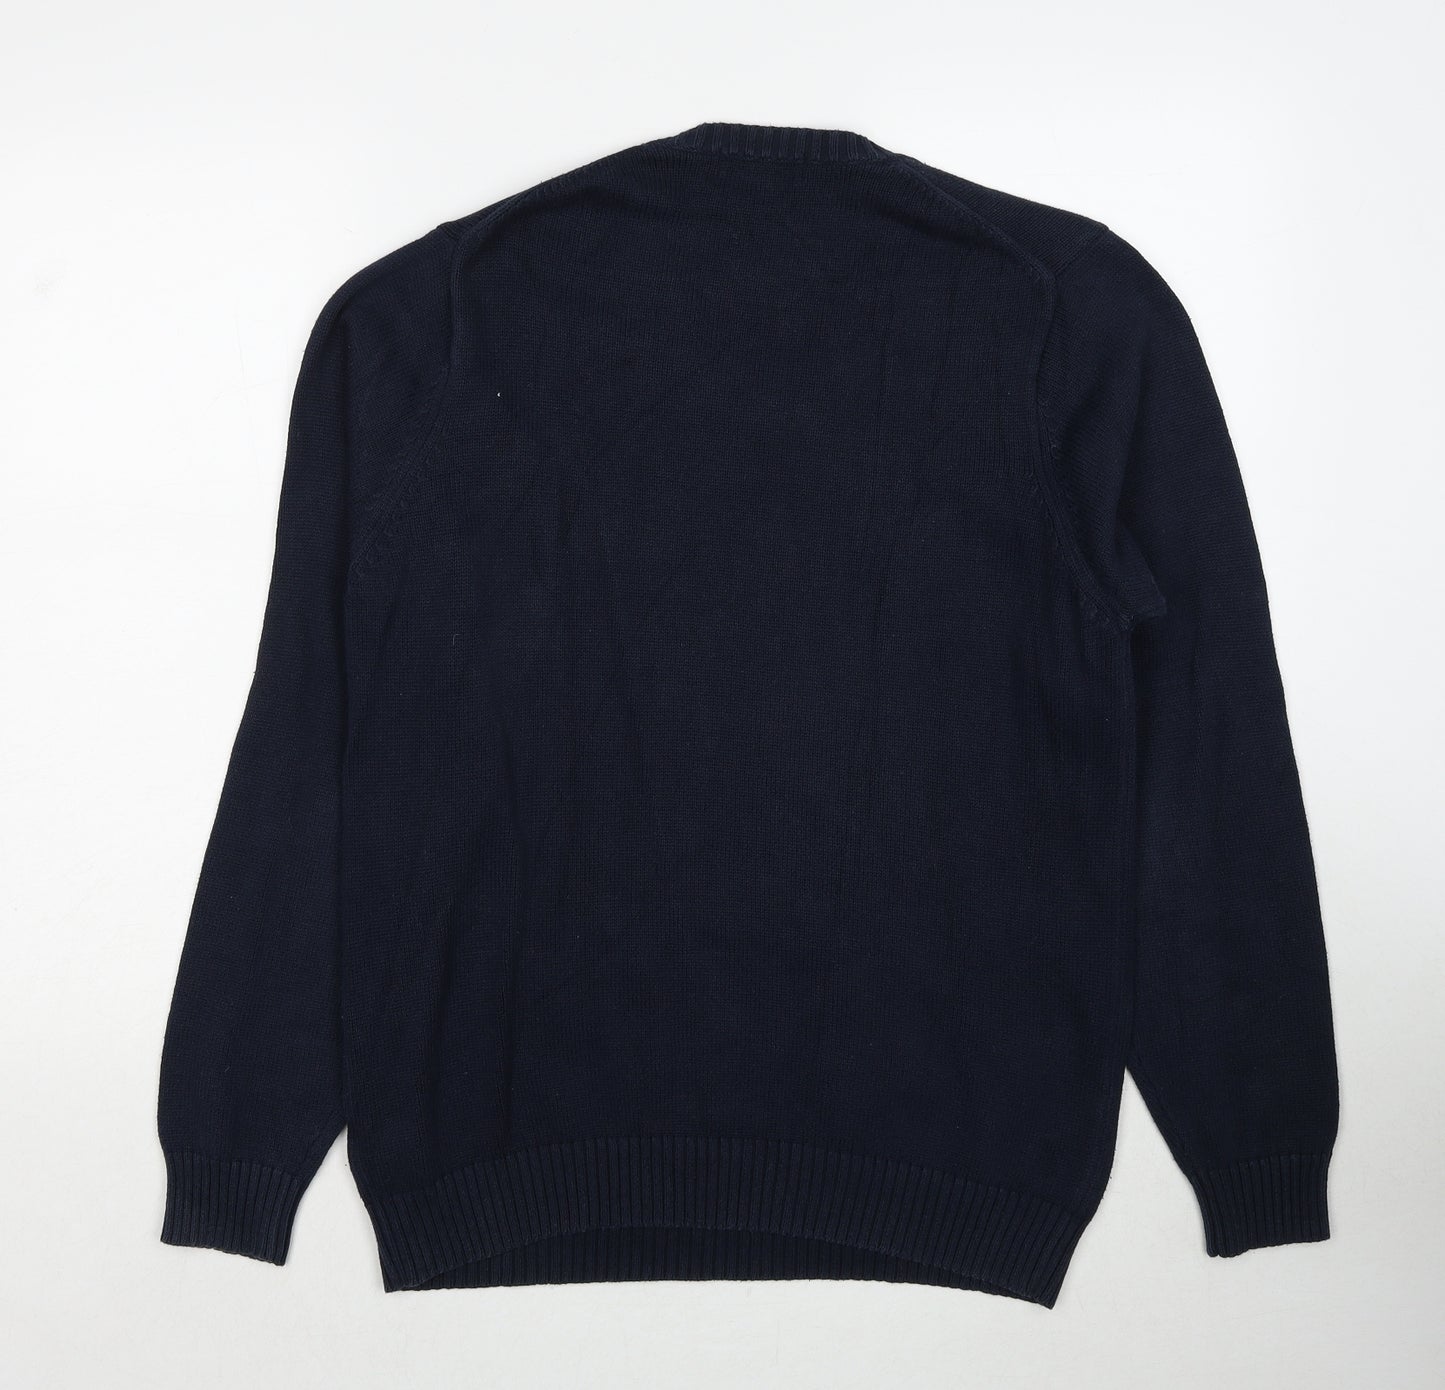 Marks and Spencer Mens Blue V-Neck Cotton Pullover Jumper Size S Long Sleeve